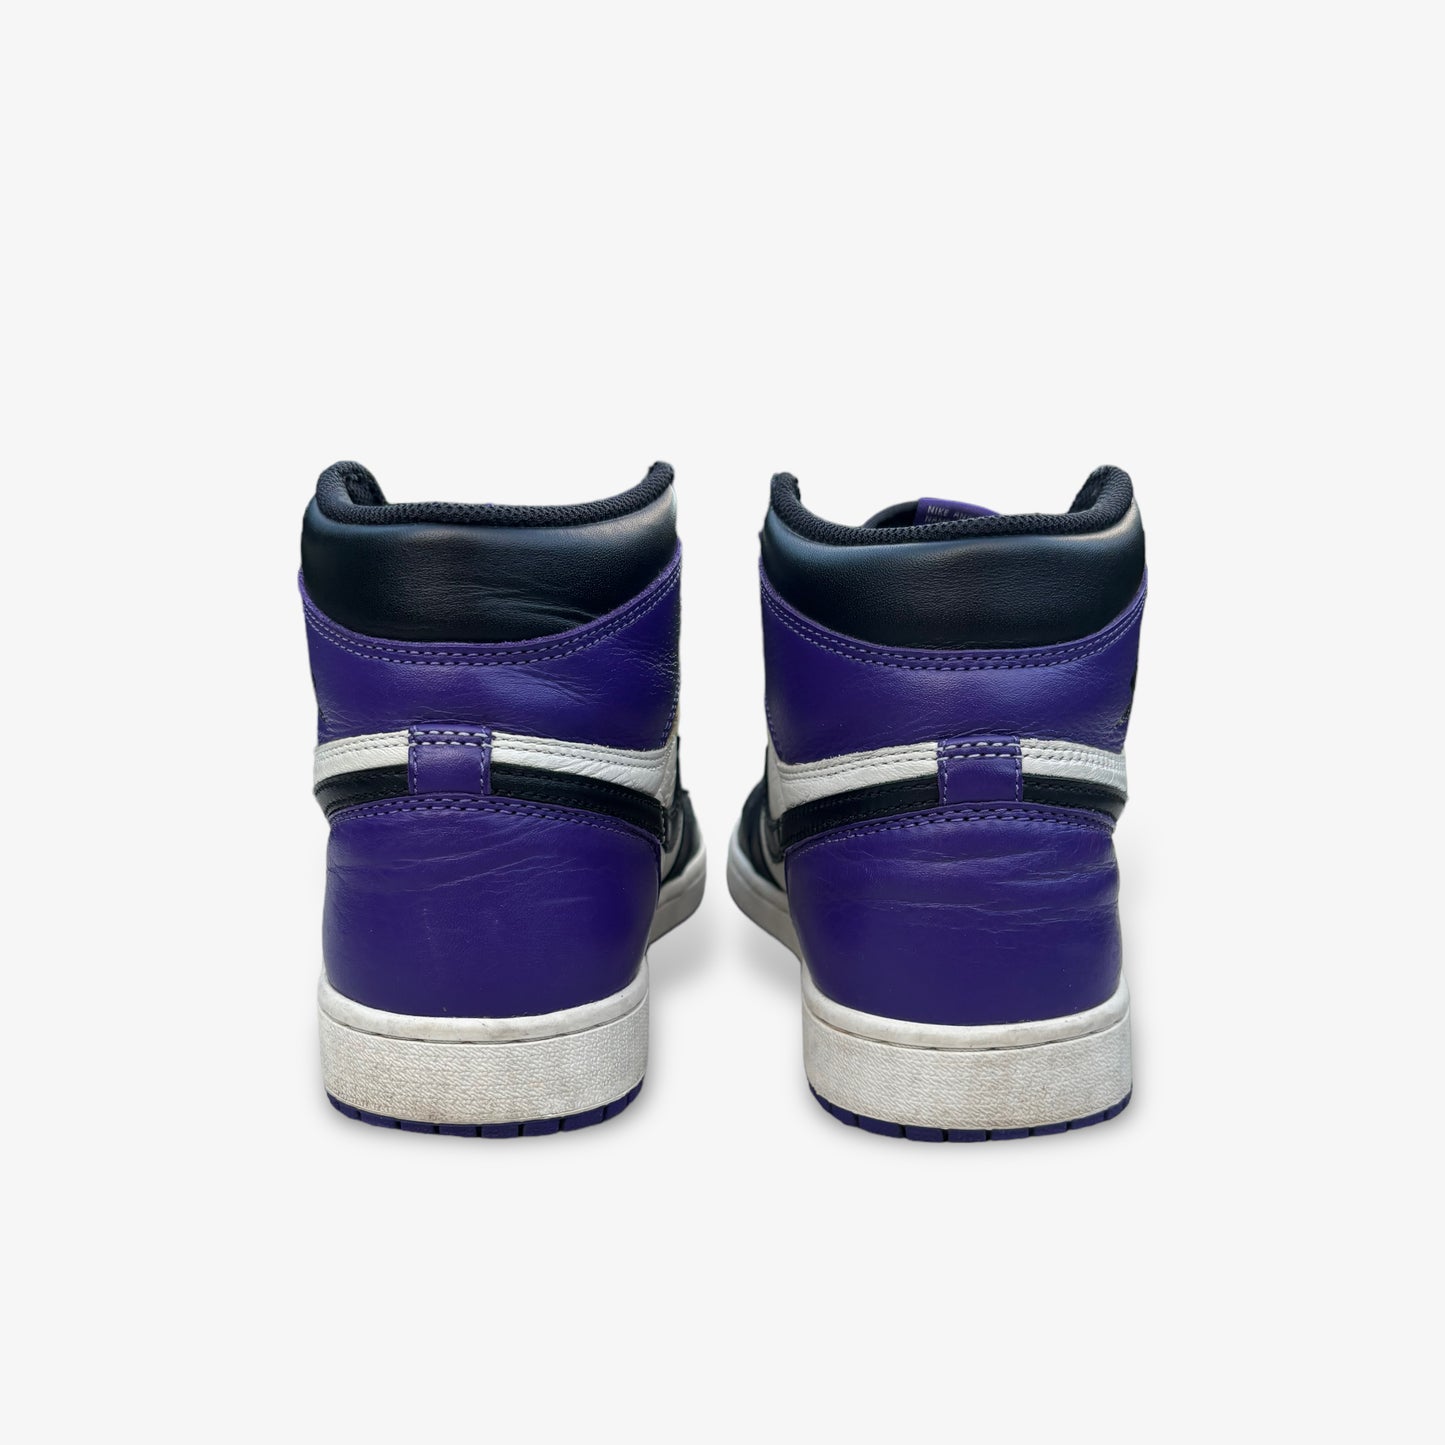 Air Jordan 1 High “Court Purple" (2018)